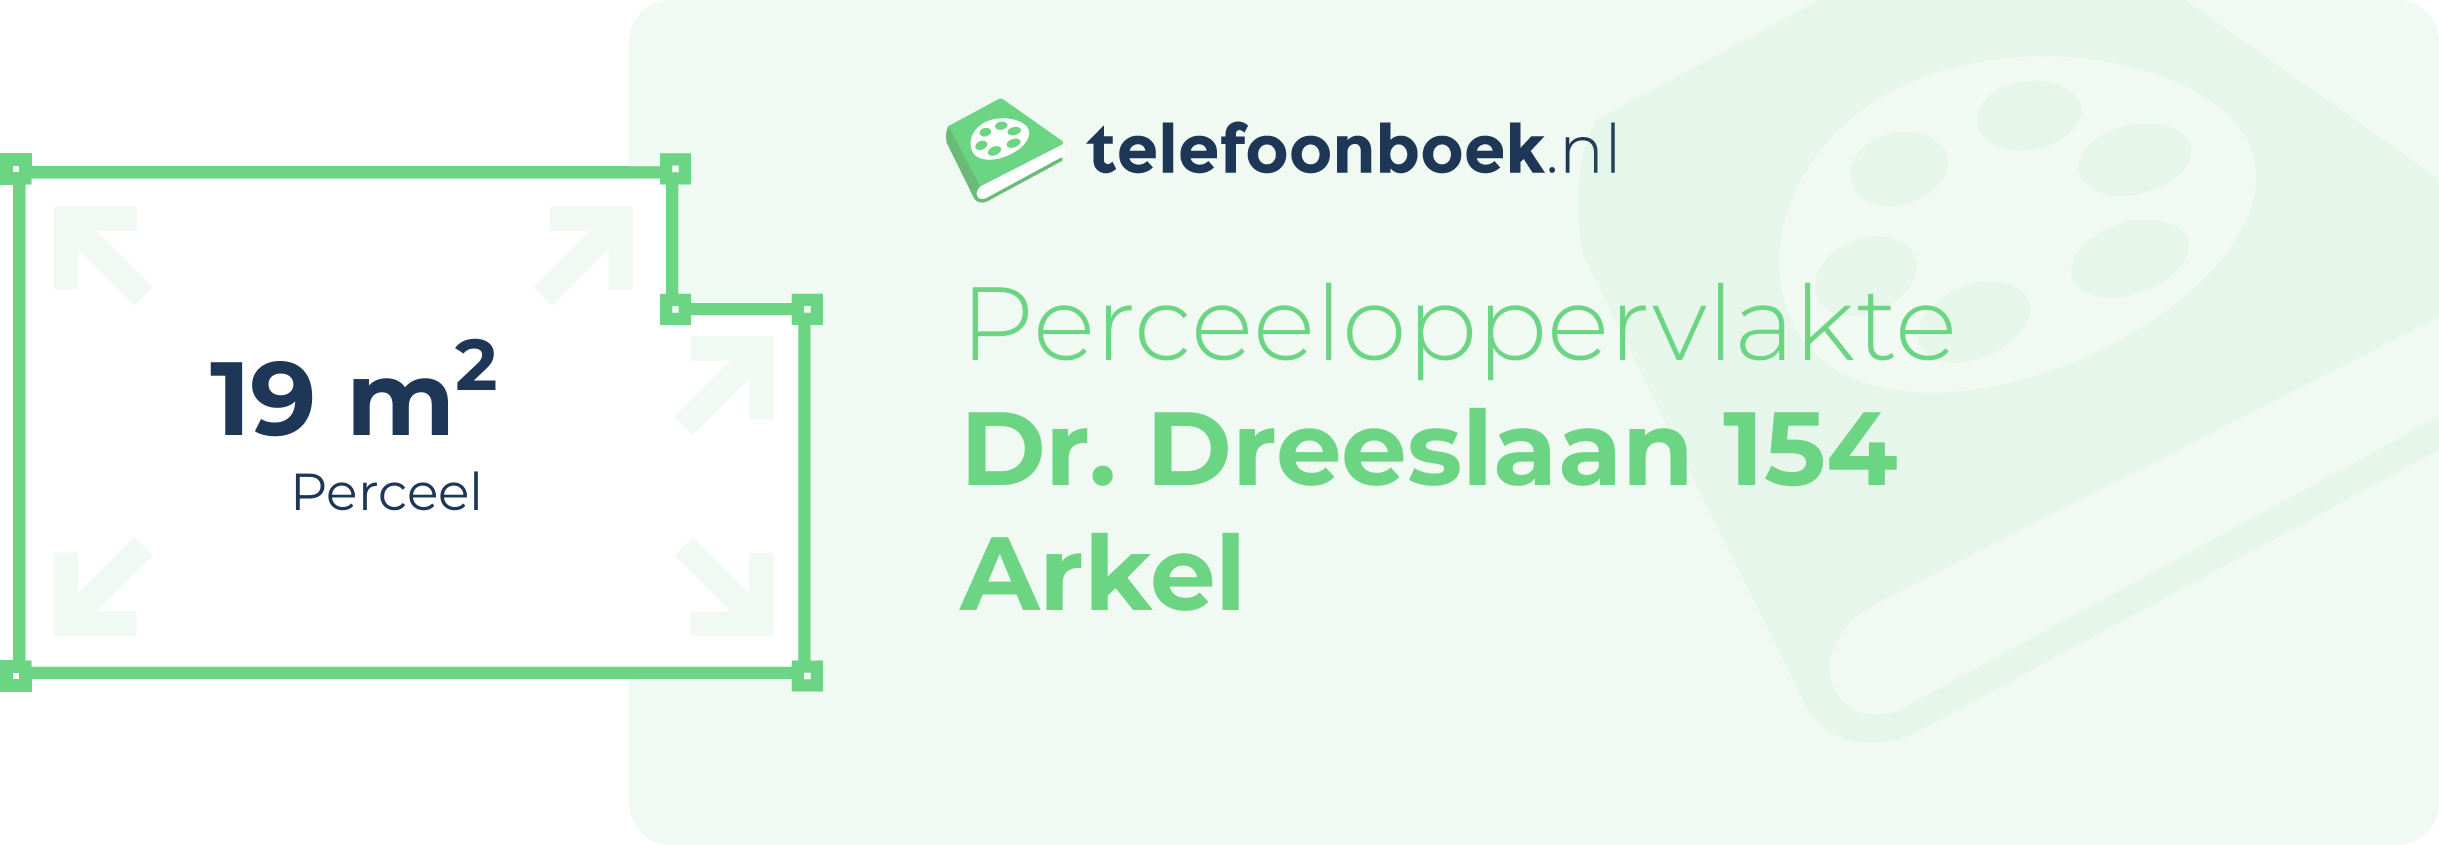 Perceeloppervlakte Dr. Dreeslaan 154 Arkel